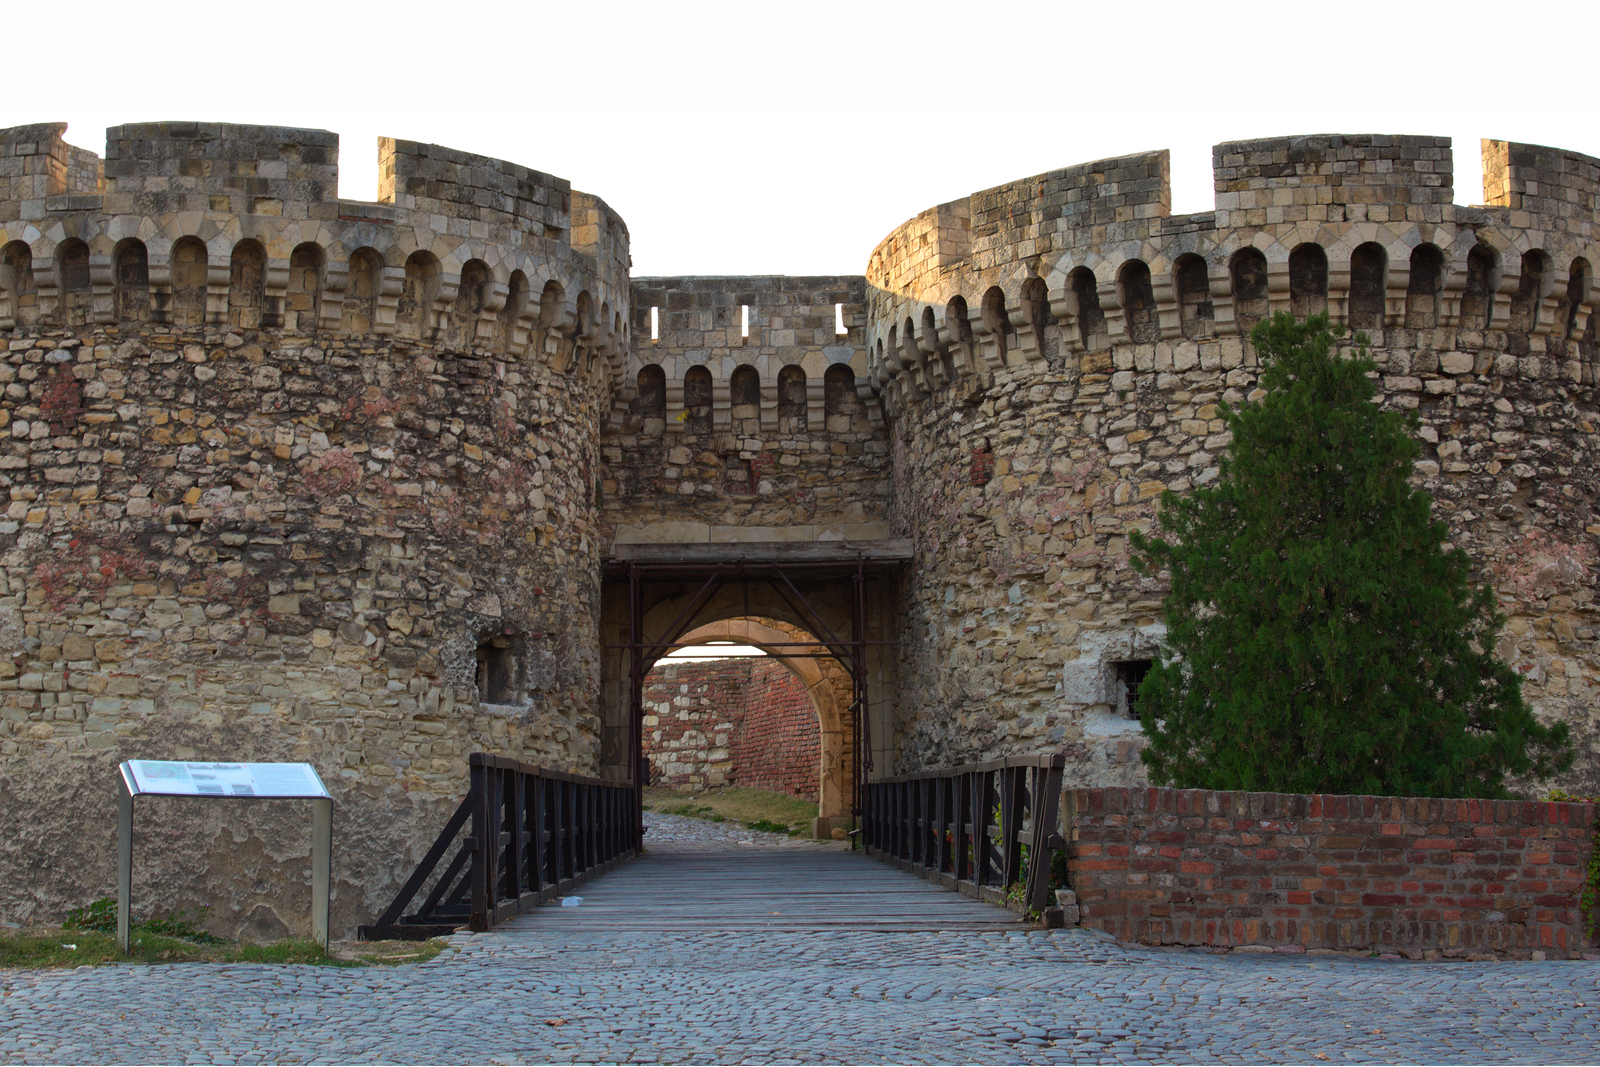 Kalemegdan Fortress in Belgrade is a popular destination on the Lower Danube for river cruising